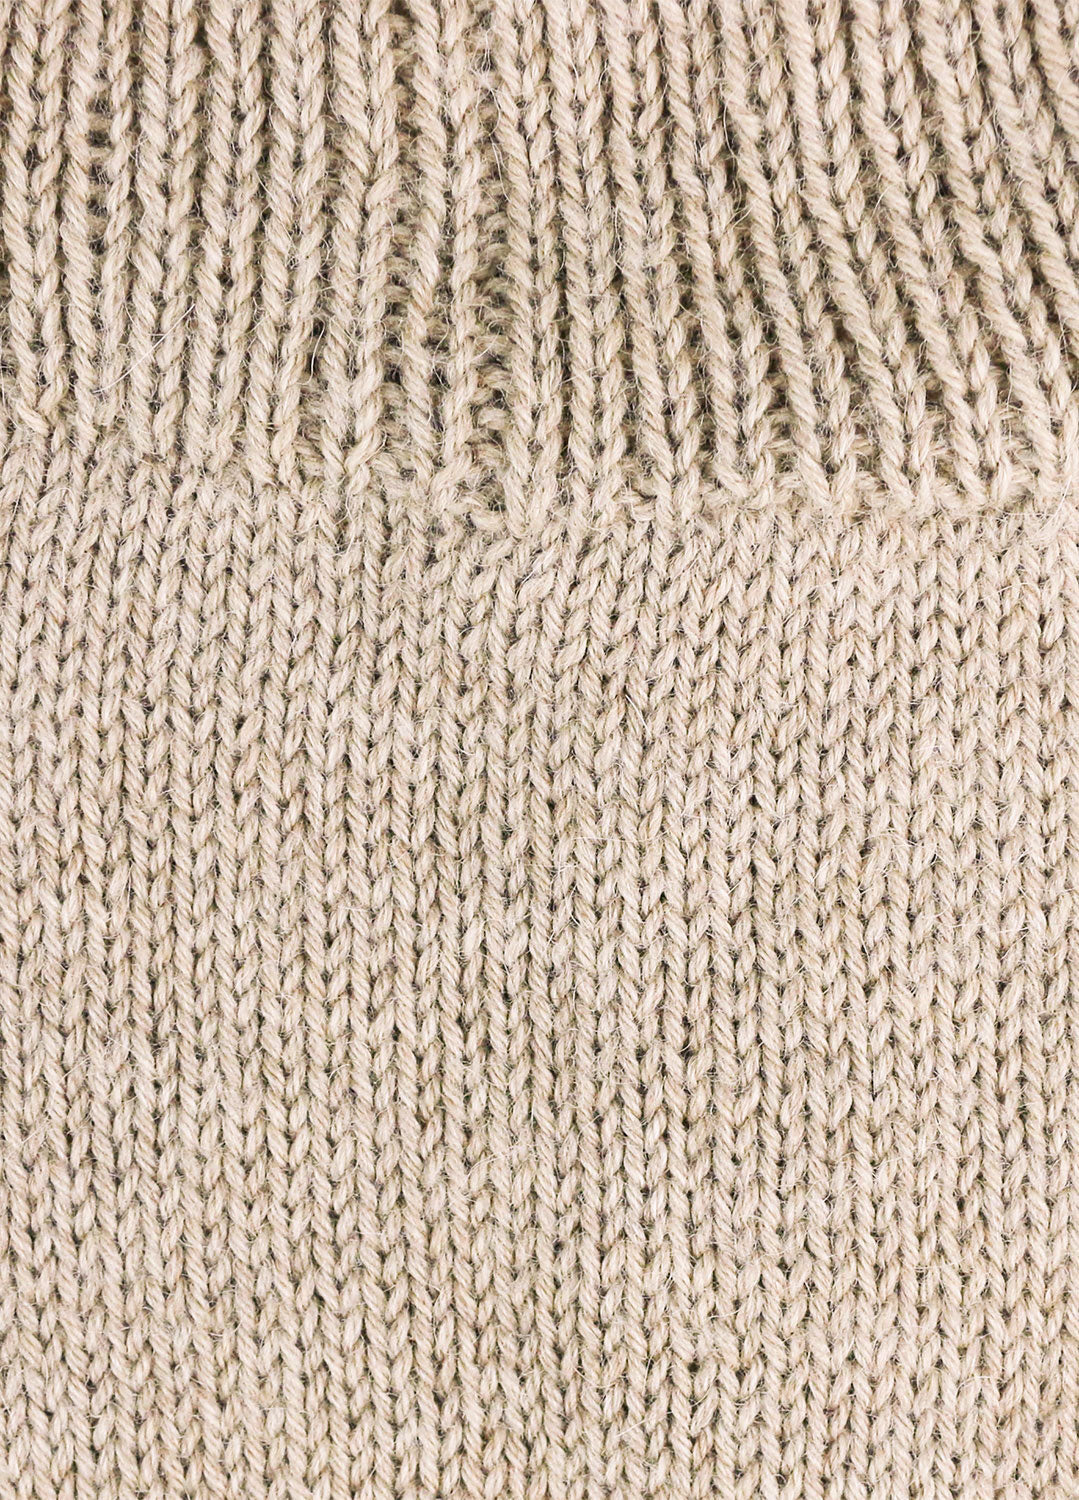 Birch Sweater Kit